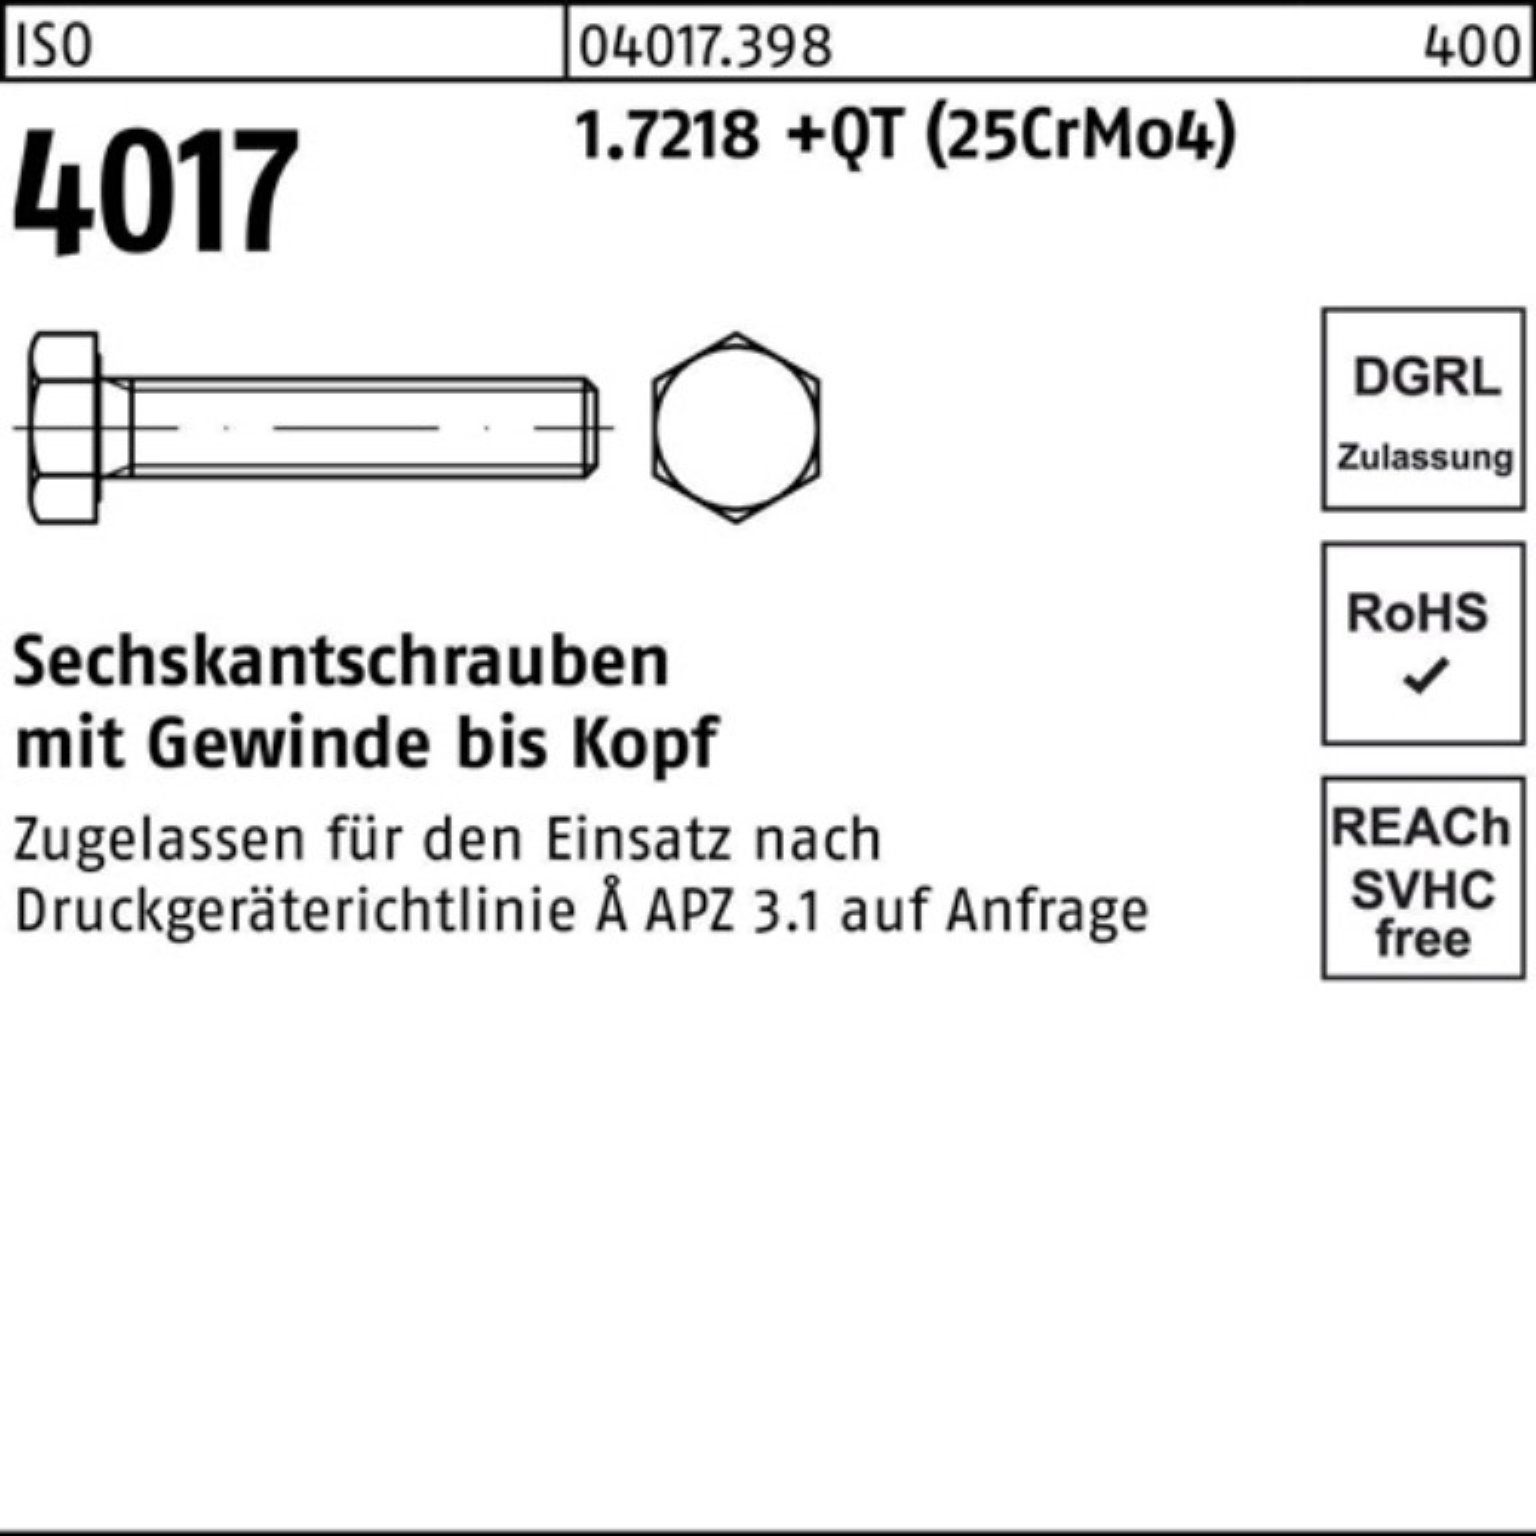 M24x ISO Sechskantschraube 1.7218 4017 Pack 30 Bufab Sechskantschraube (25CrMo4) +QT 100er VG